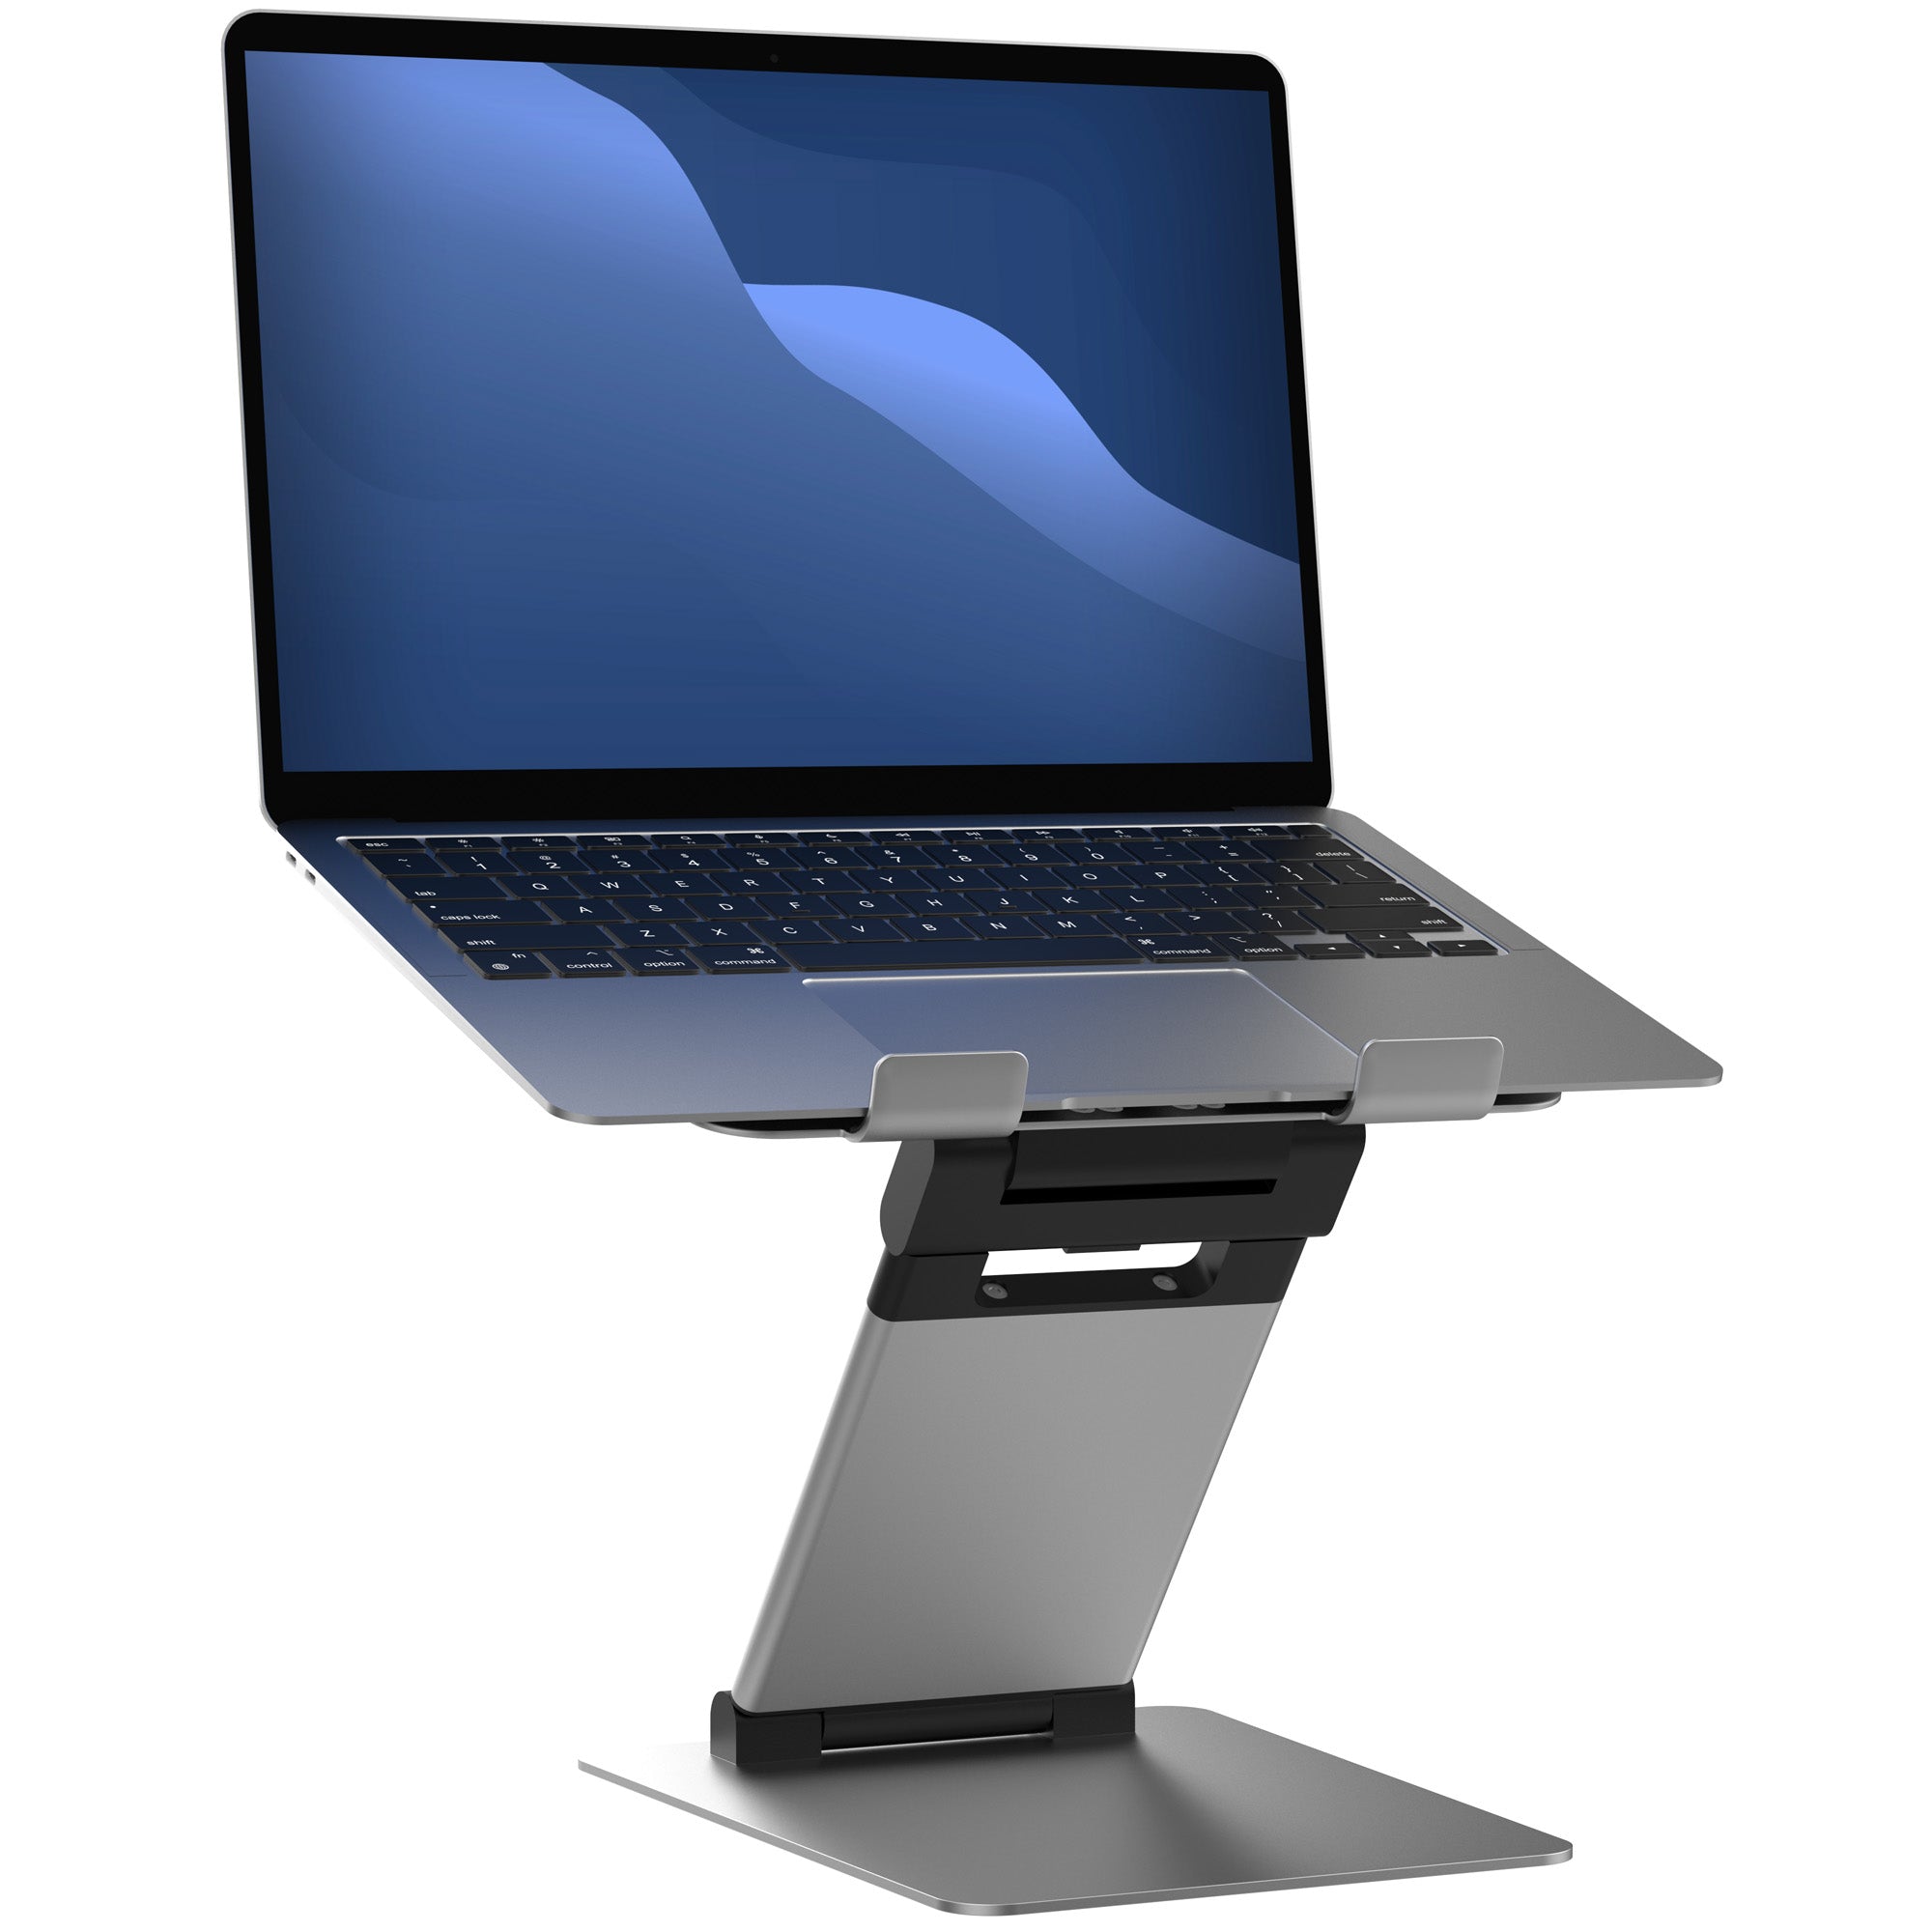 Height Adjustable Folding  Desk Mount for Laptops